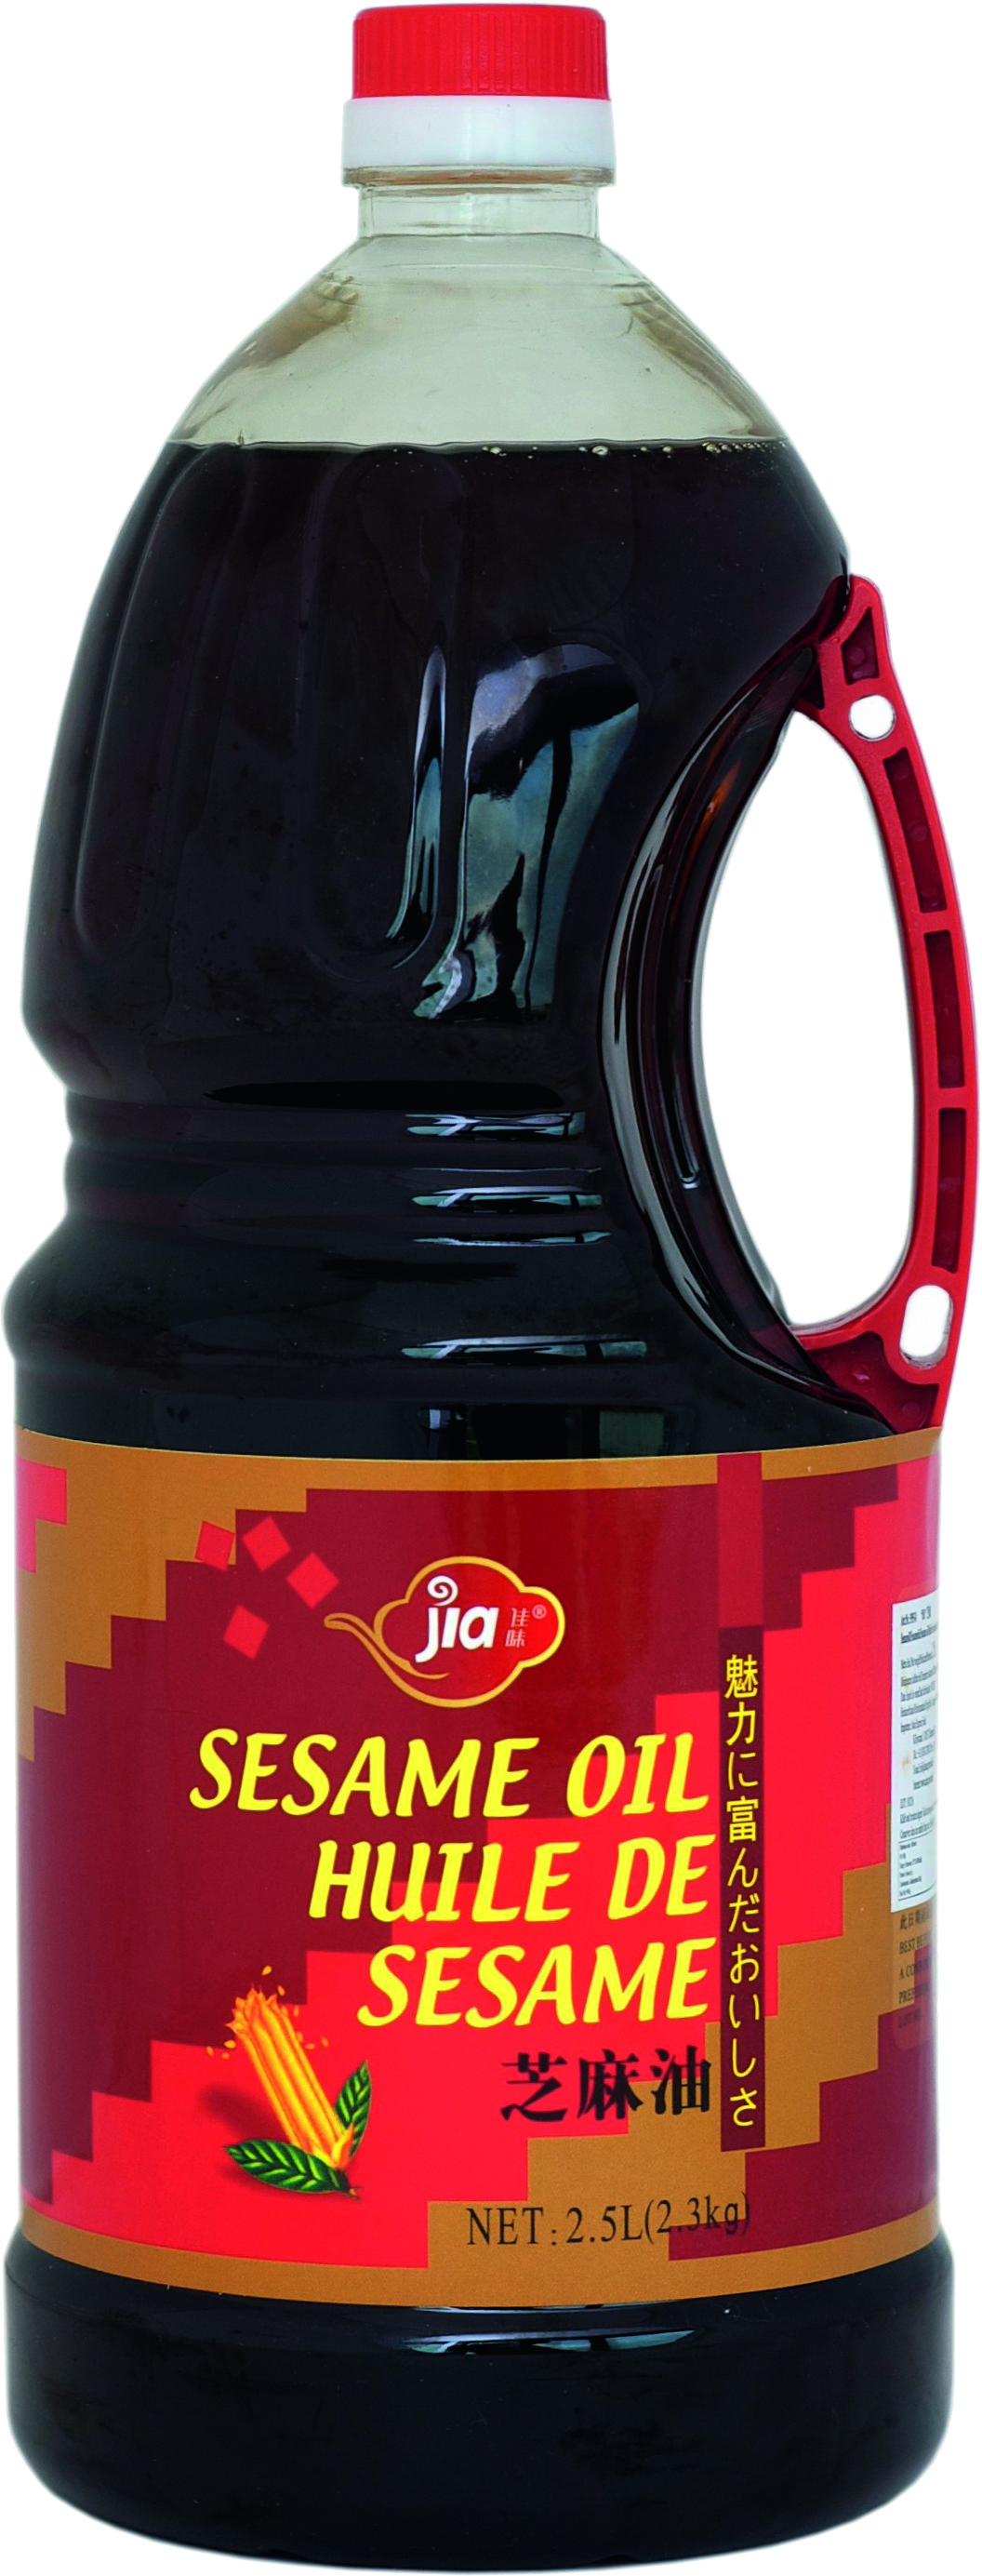 Sesame Oil 6 X 2.5 Ltr - Jia Brand